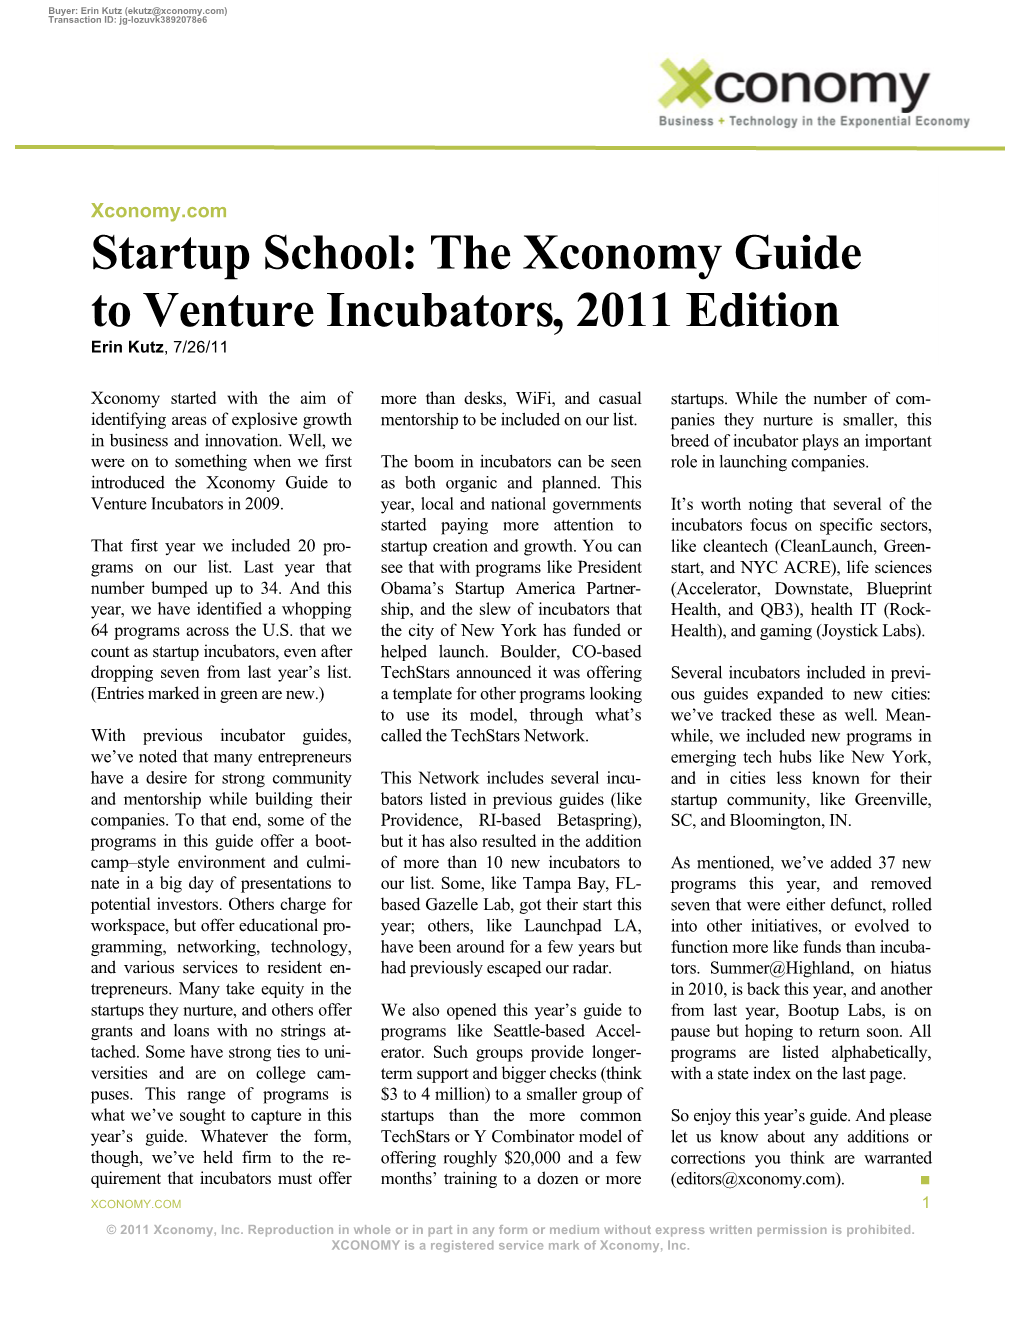 Startup School: the Xconomy Guide to Venture Incubators, 2011 Edition Erin Kutz, 7/26/11